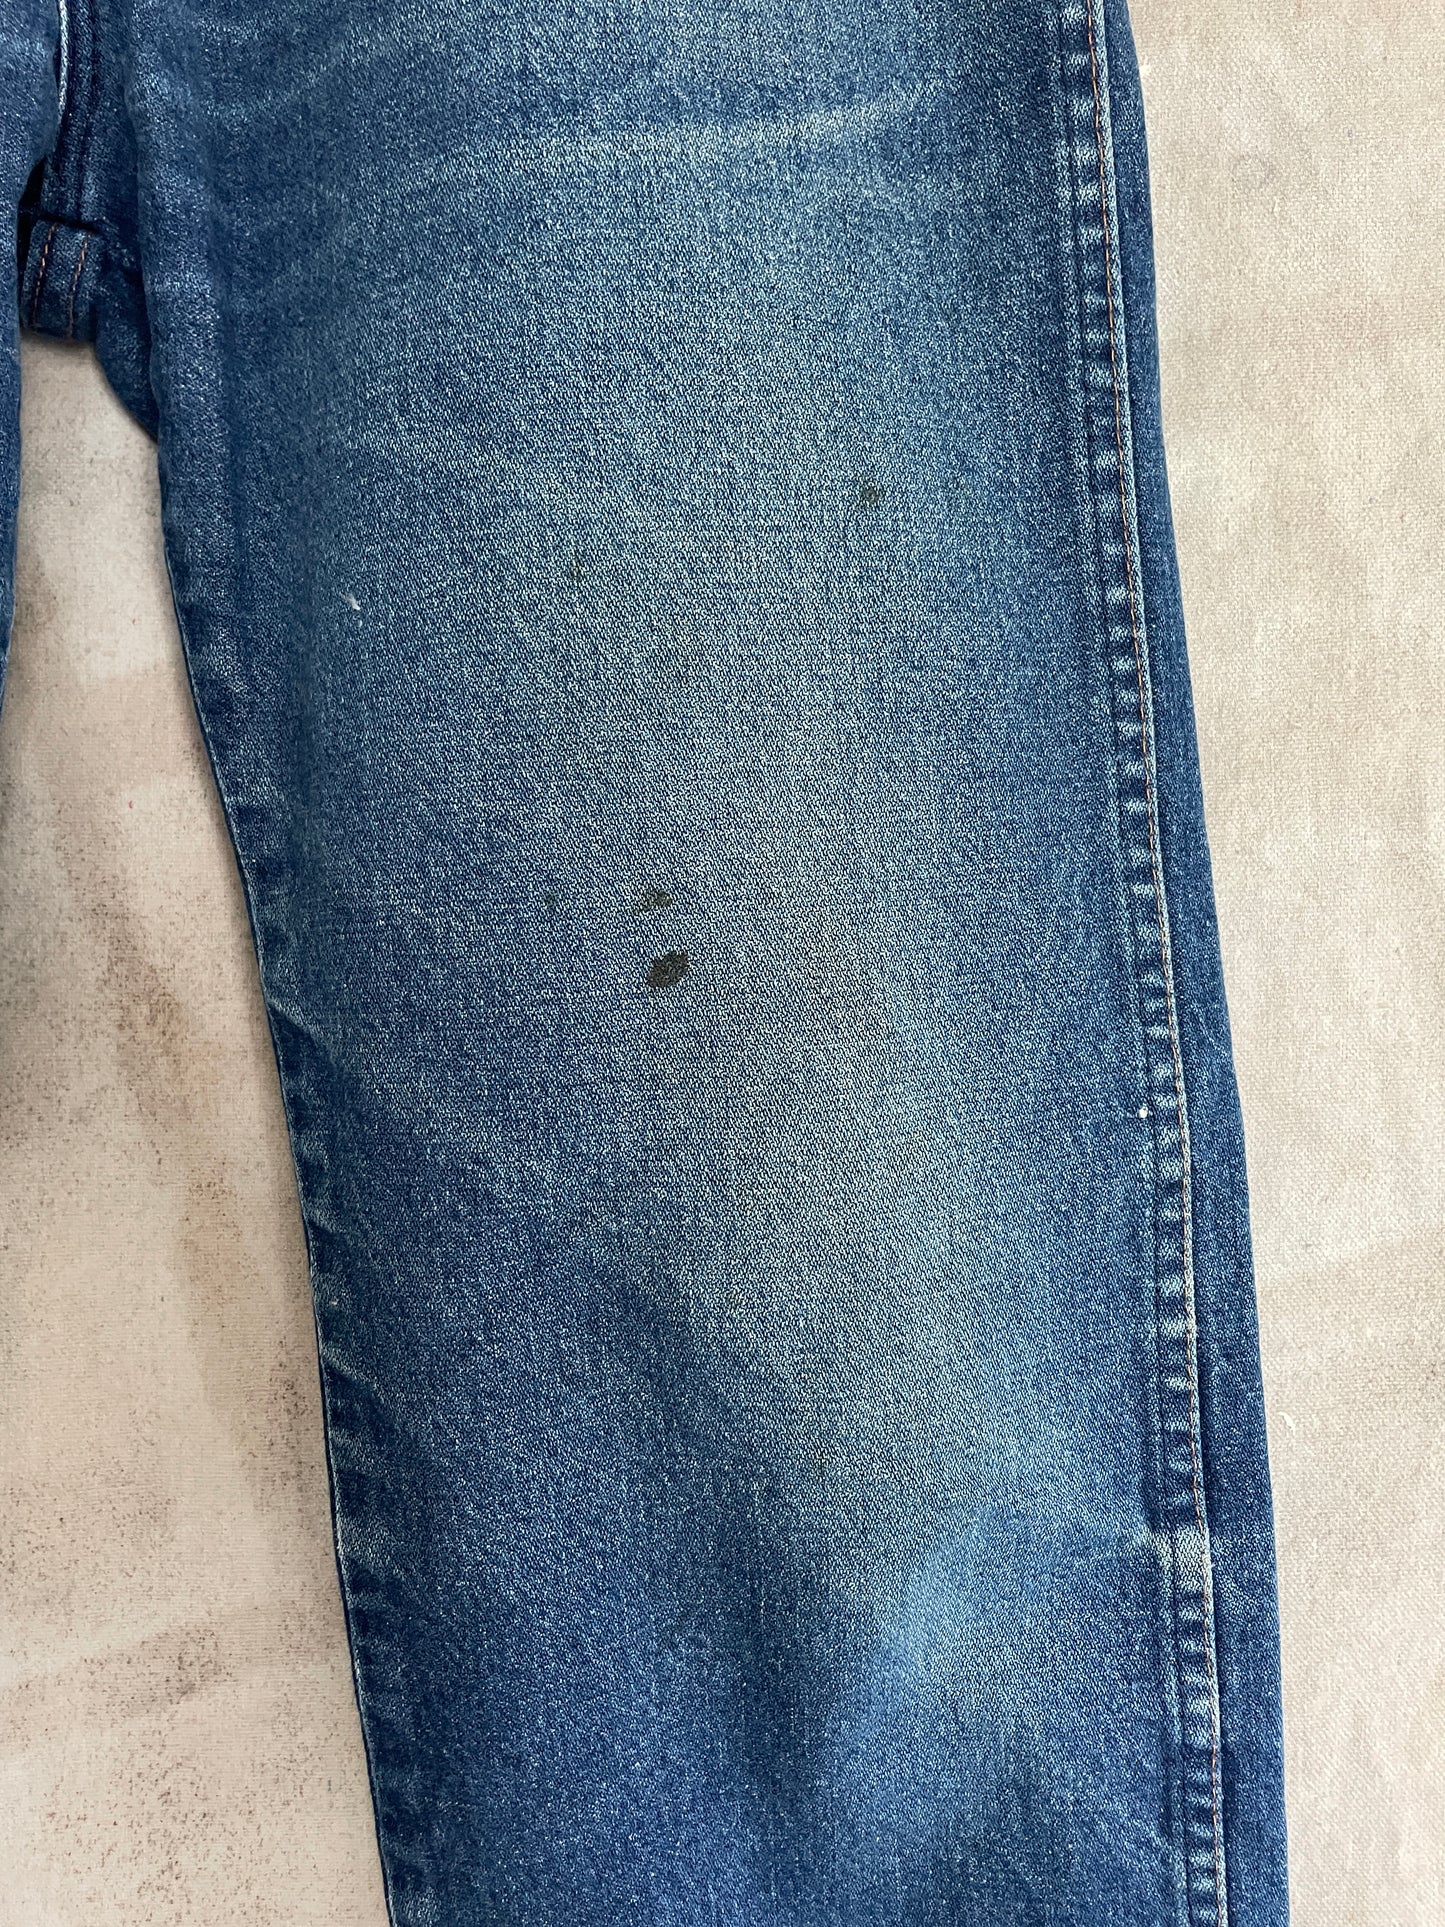 80s Faded Wrangler Jeans